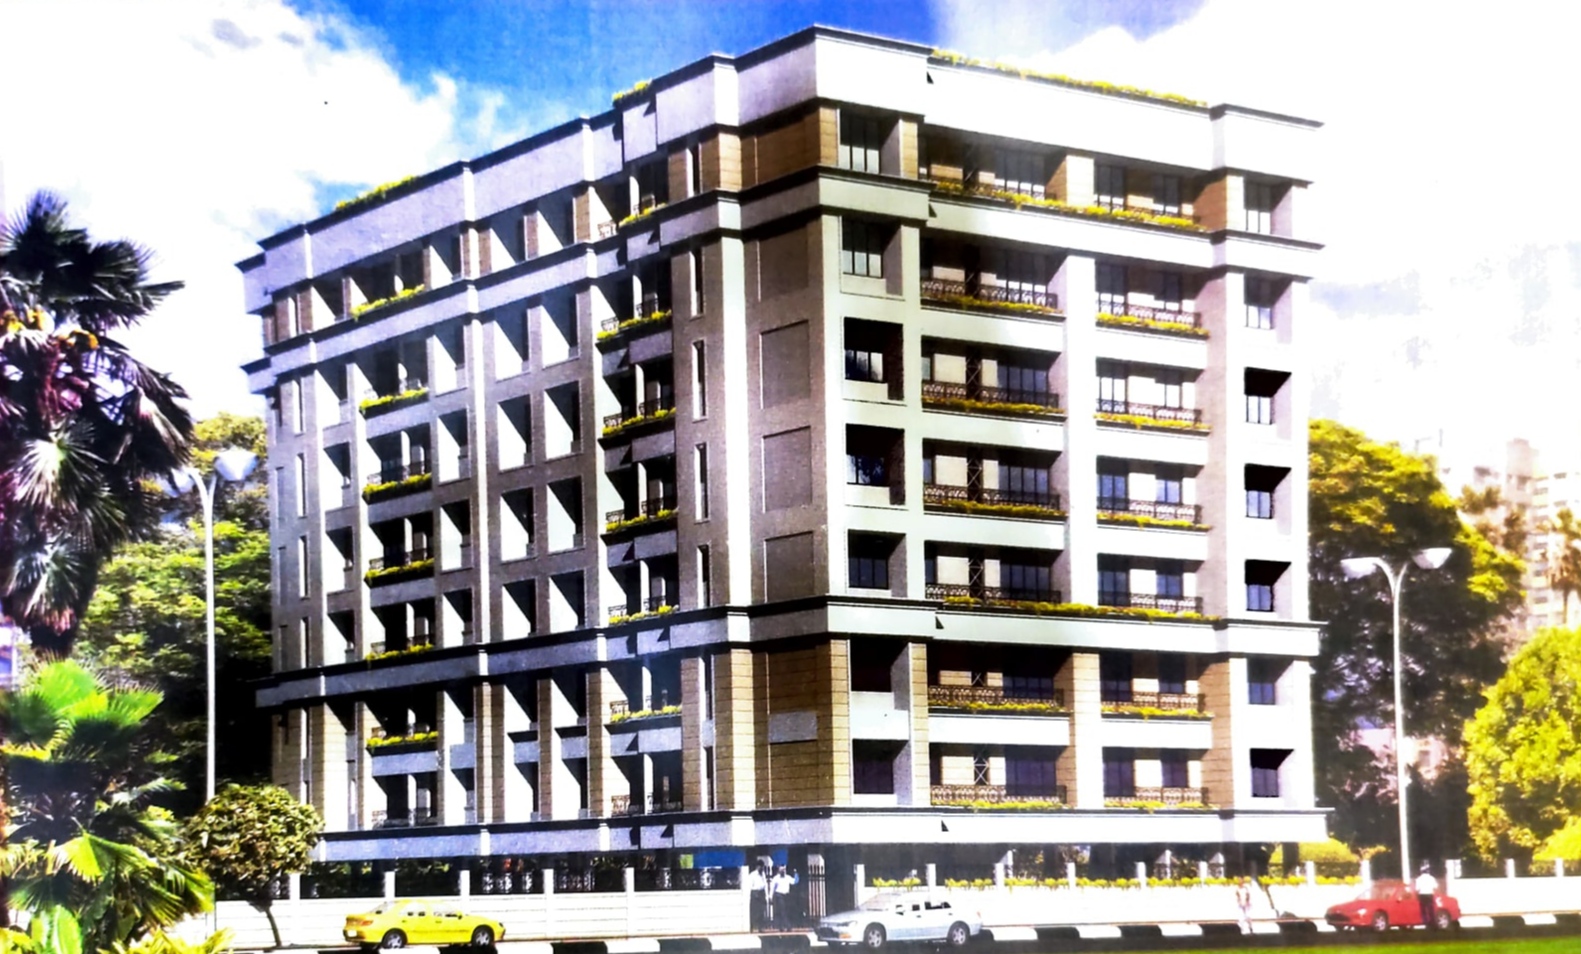 Mahant Apartments (A,B,C & D Wing) – Old Nagardas Road, Andheri East